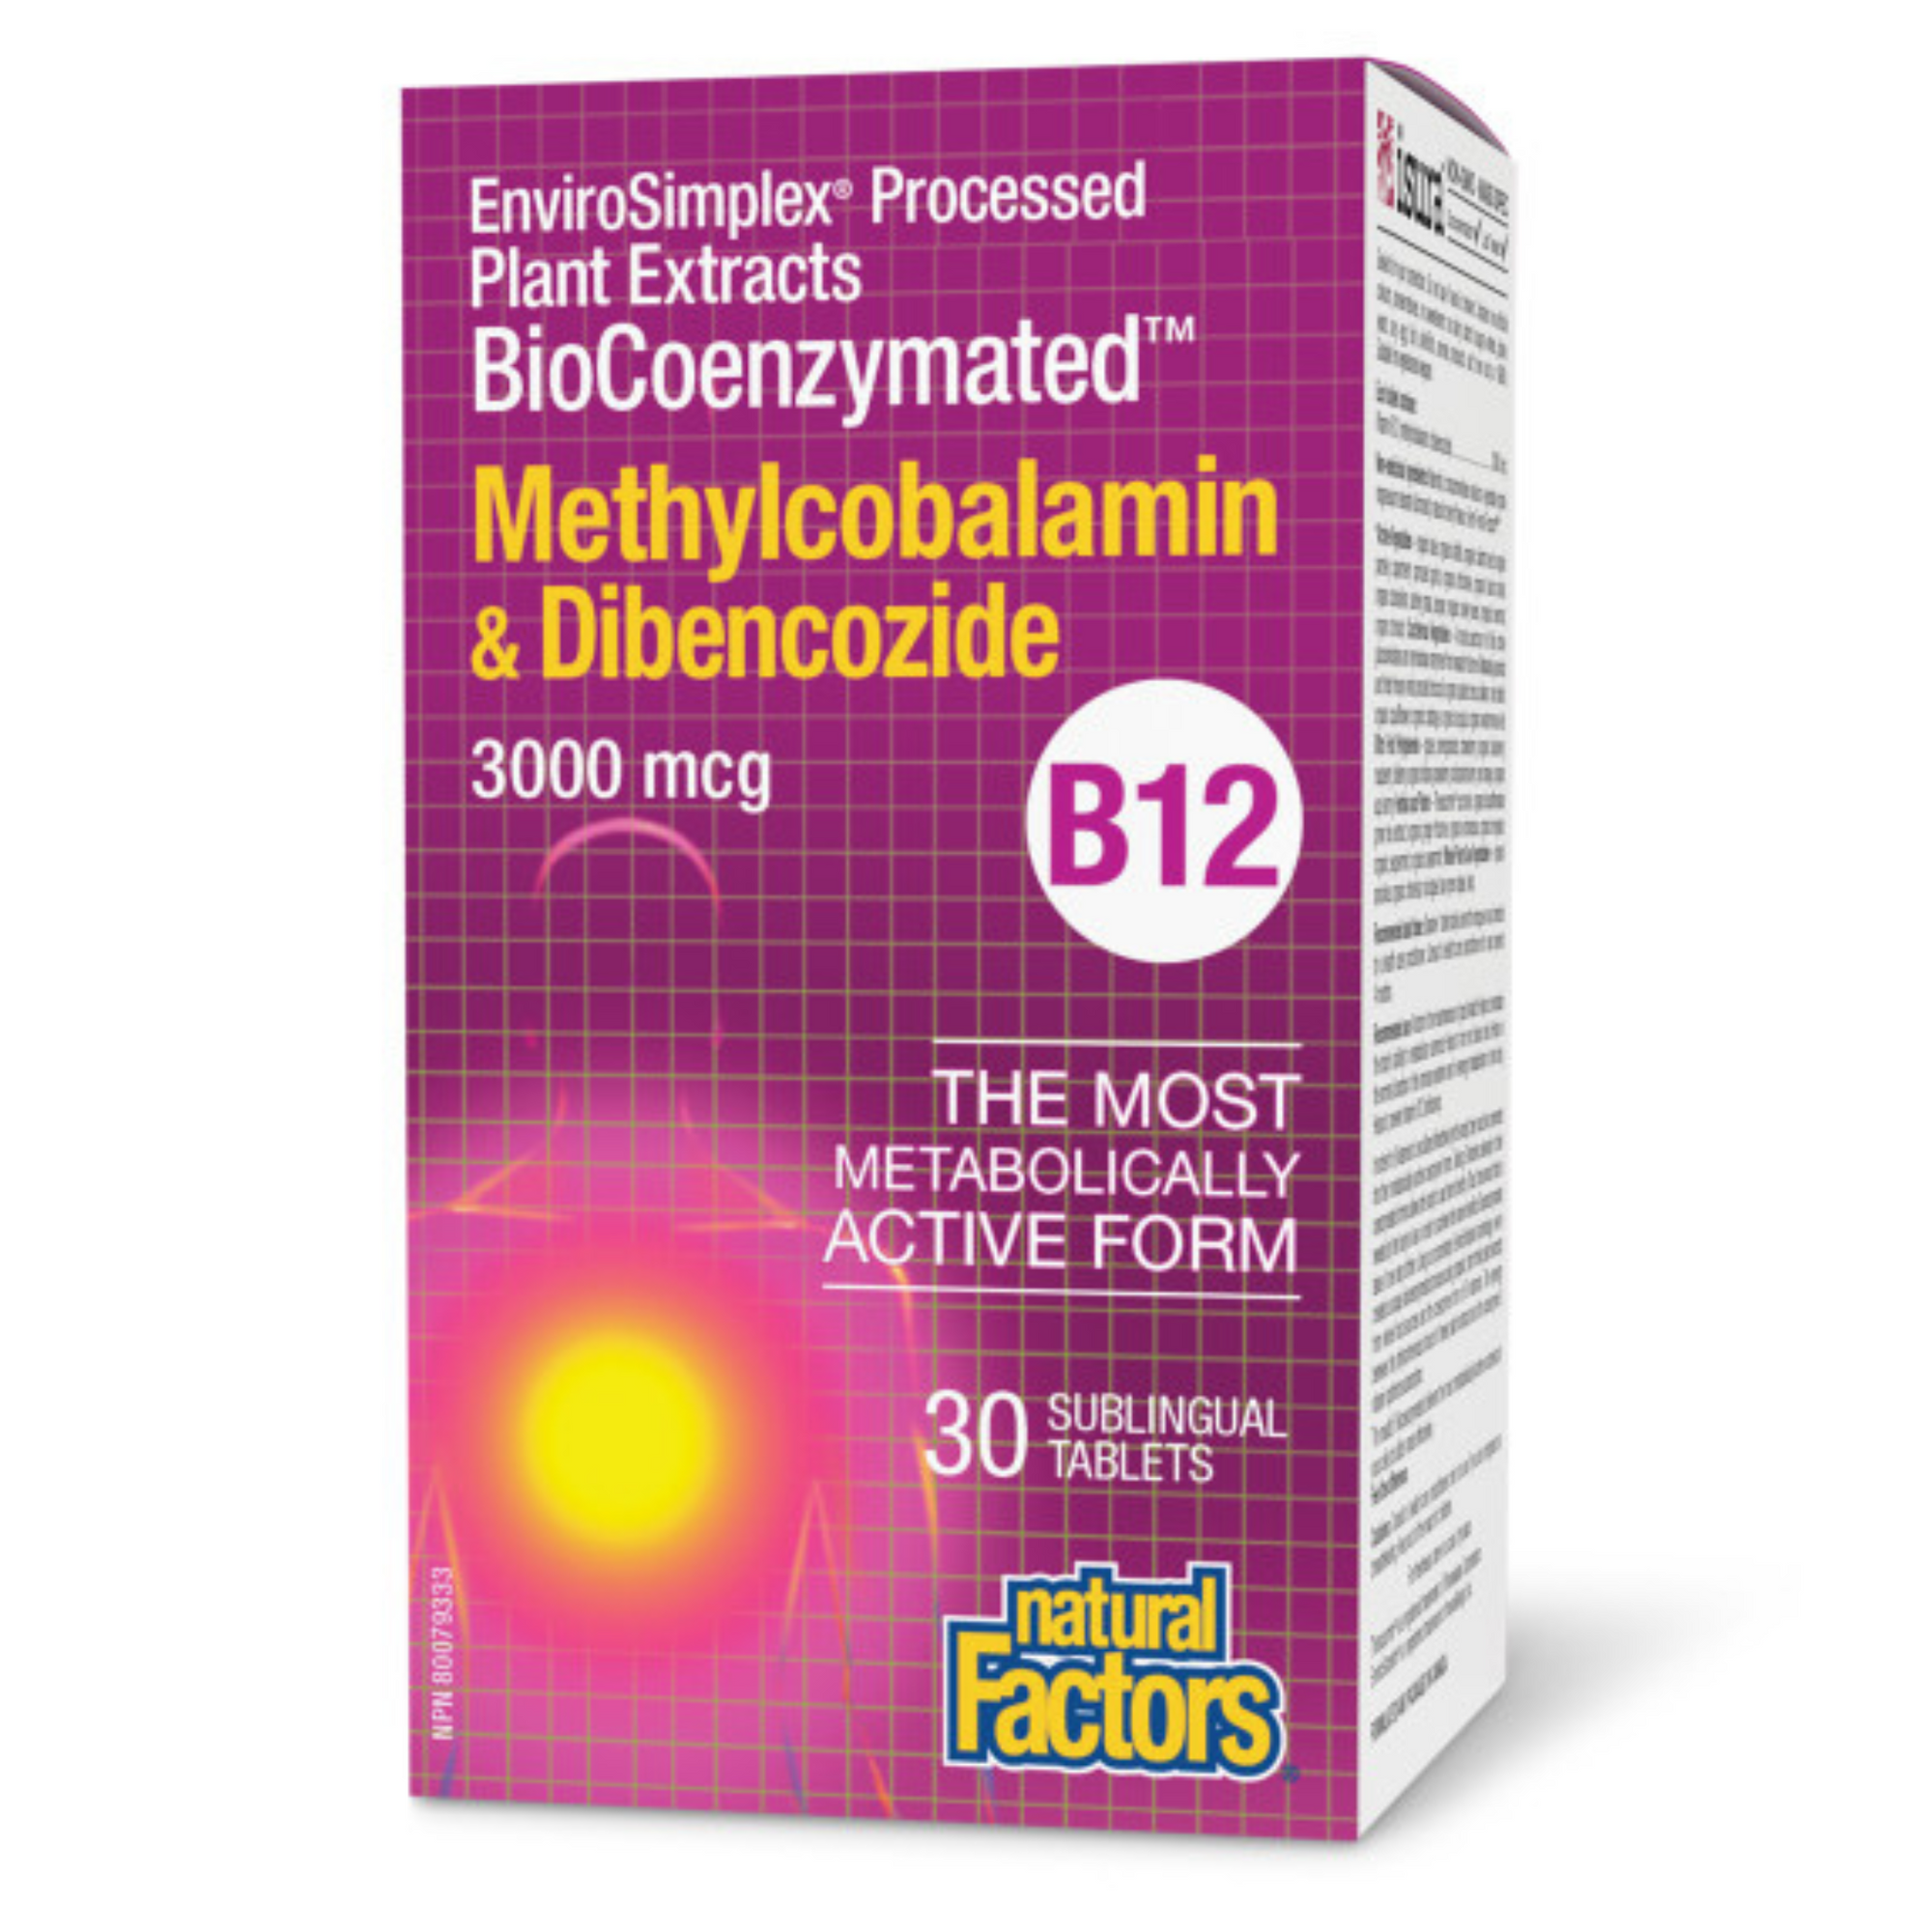 Natural Factors BioCoenzymated Methylcobalamin & Dibencozide 3000 mcg - featuring both forms of highly bioavailable Vitamin B12 - 30 sublingual tablets